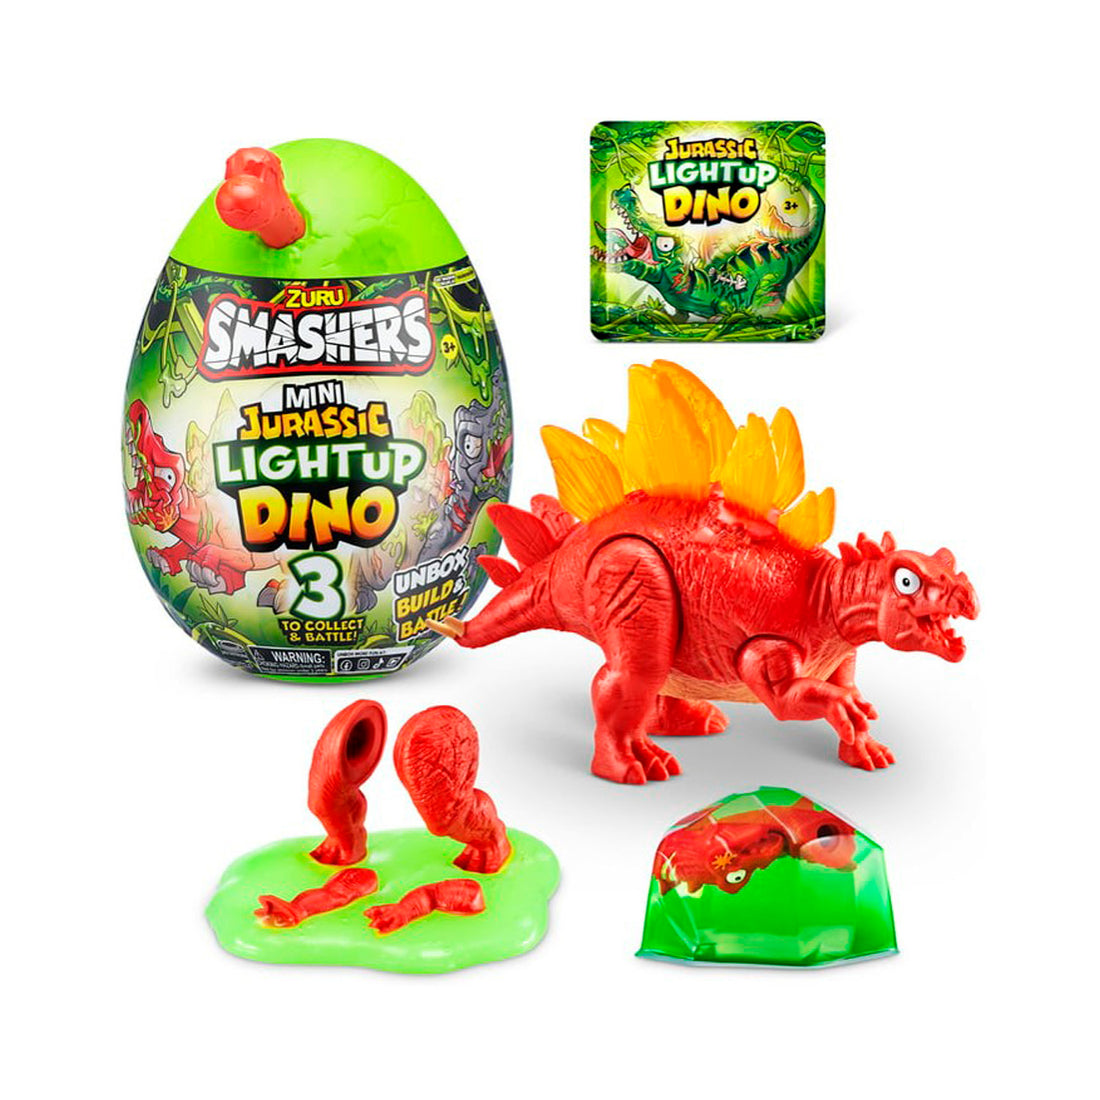 Smashers Mini Jurassic Light Up Dino - Fun